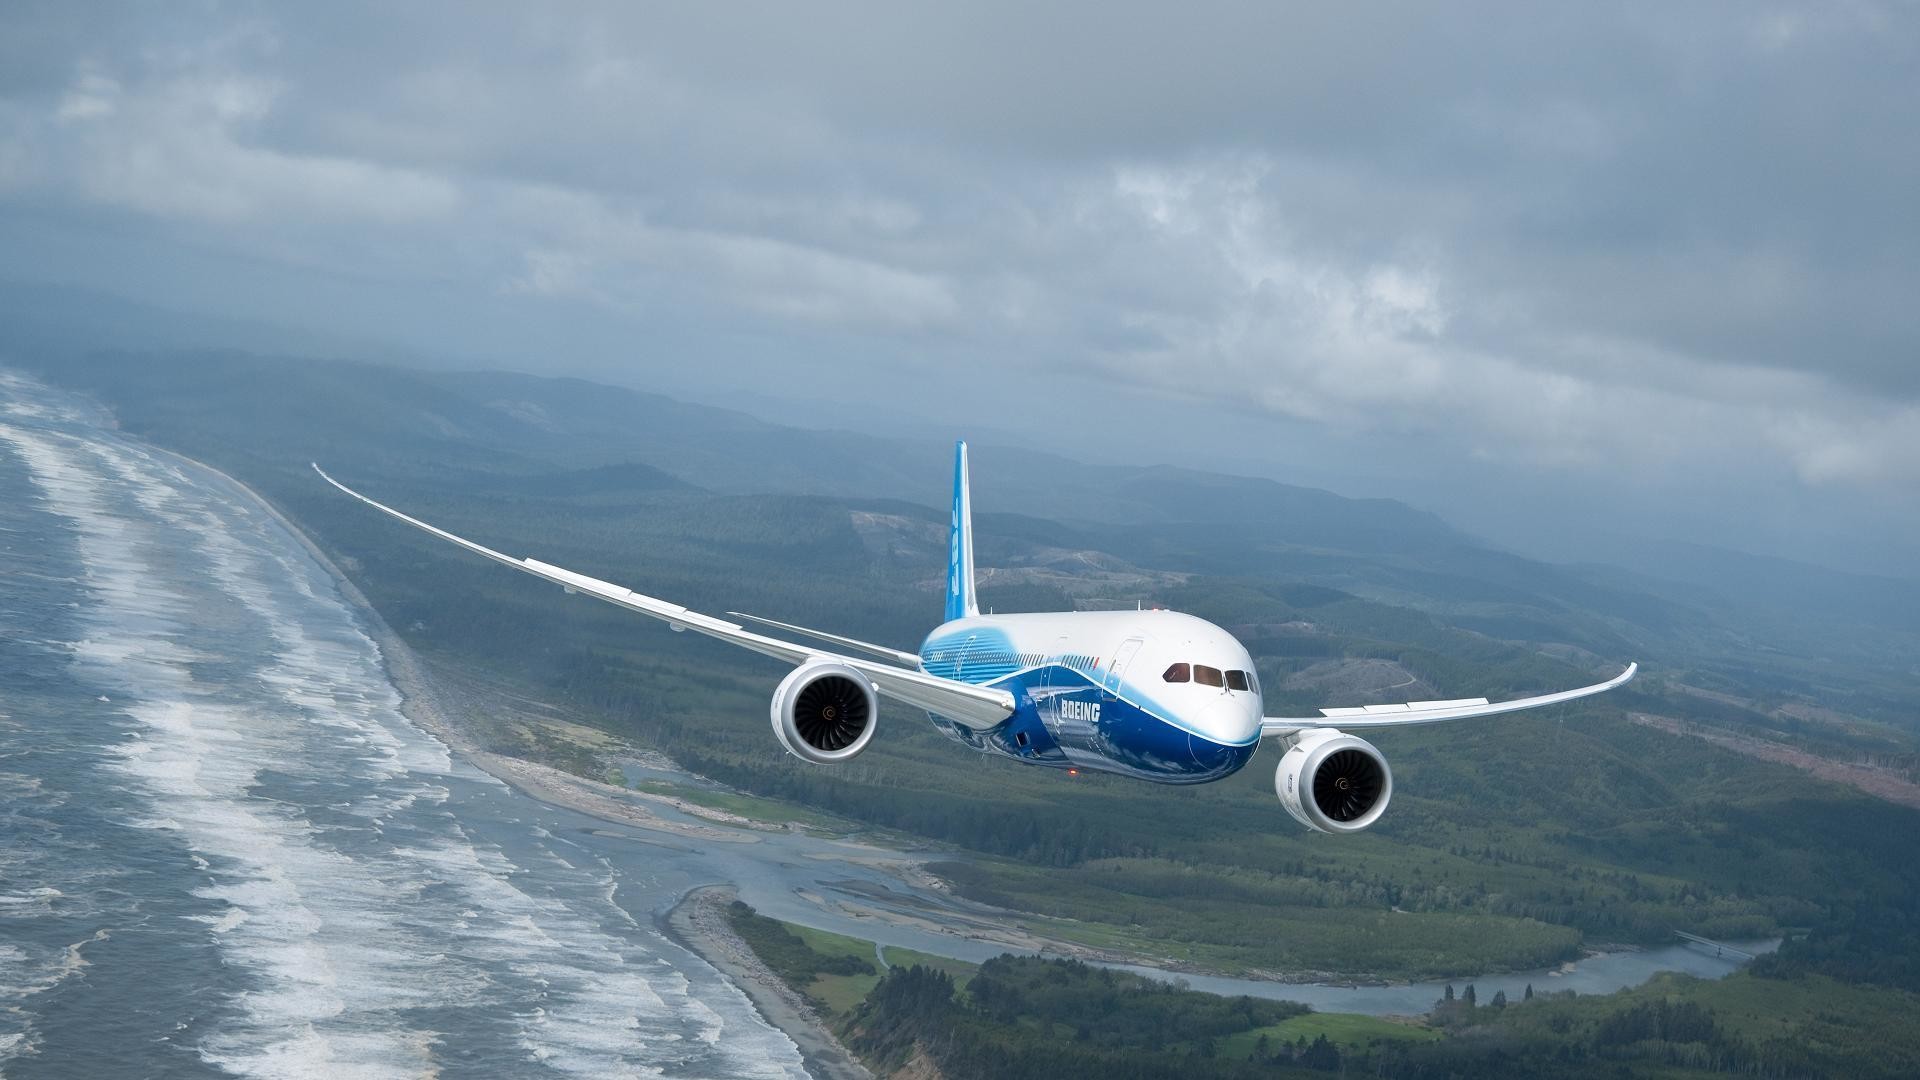 Boeing 787 Dreamliner Wallpapers